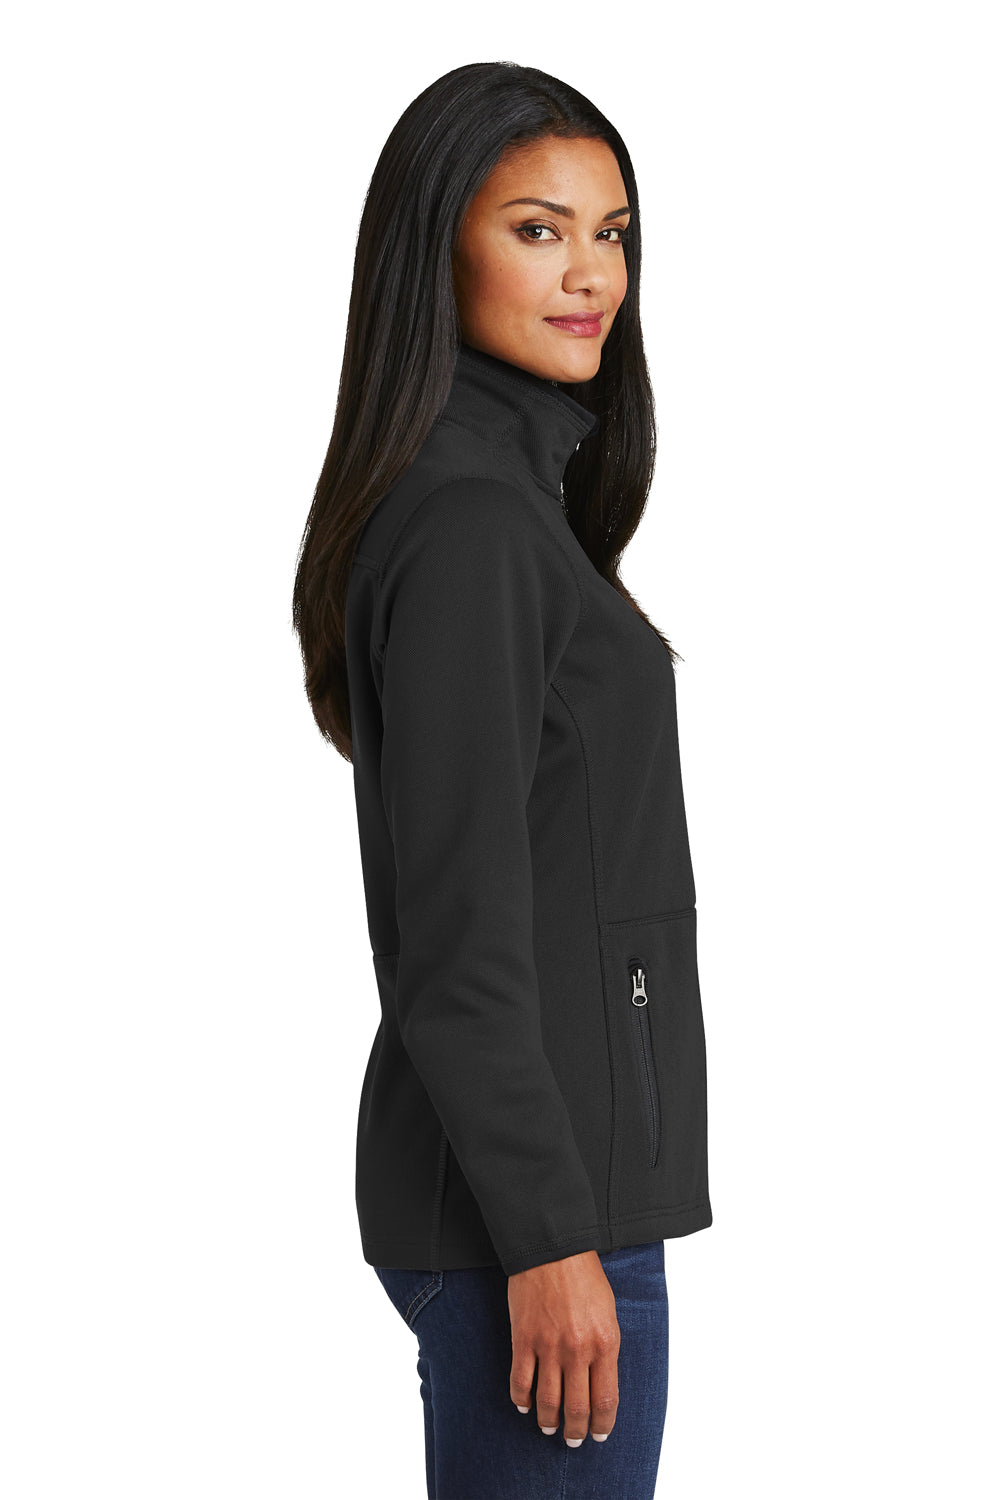 Port Authority L222 Womens Full Zip Fleece Jacket Black Side